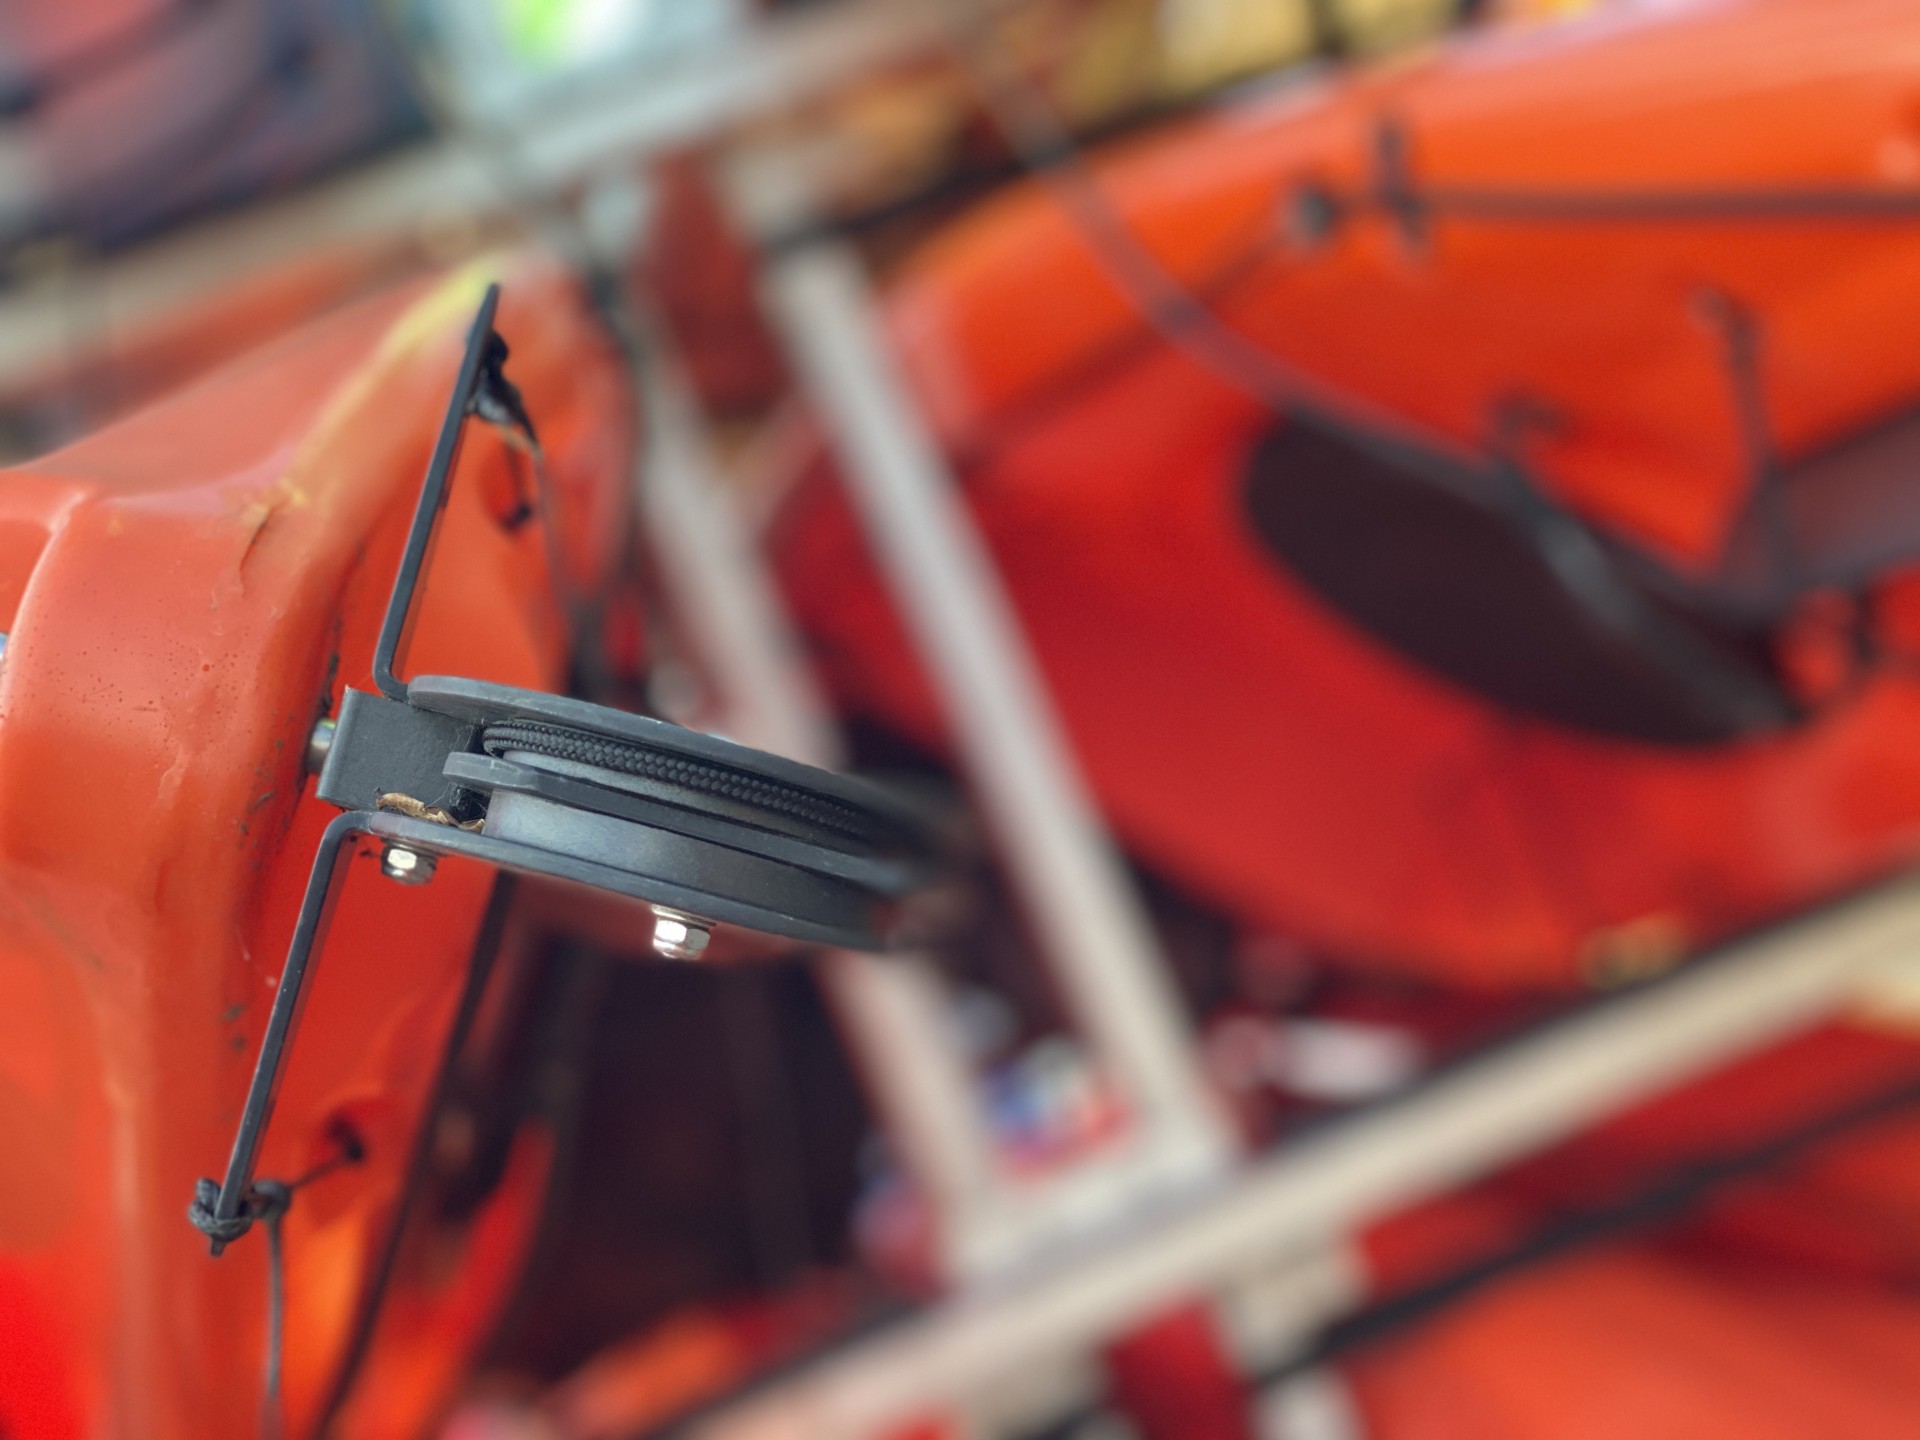 Rudder on the stern of an orange kayak.